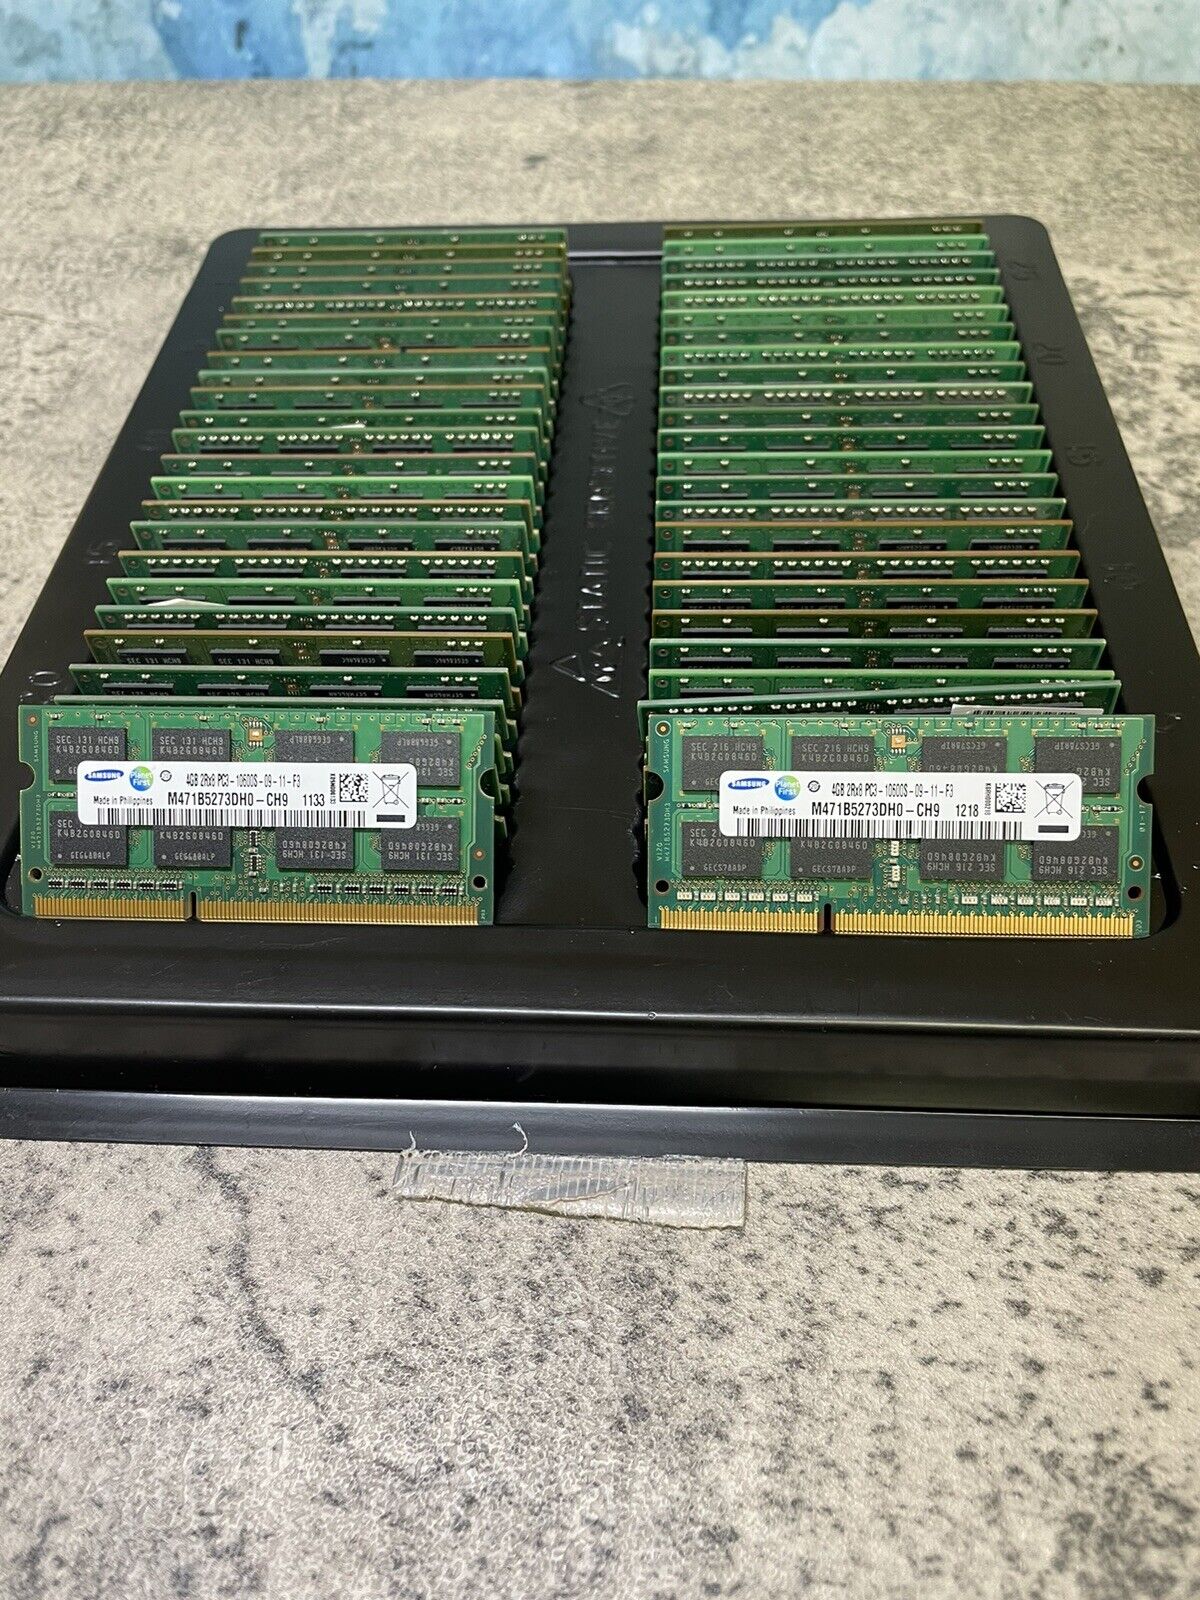 SAMSUNG 4Gb 2Rx8 DDR3 PC3-10600S LAPTOP SODIMM RAM MEMORY M471B5273DH0-CH9